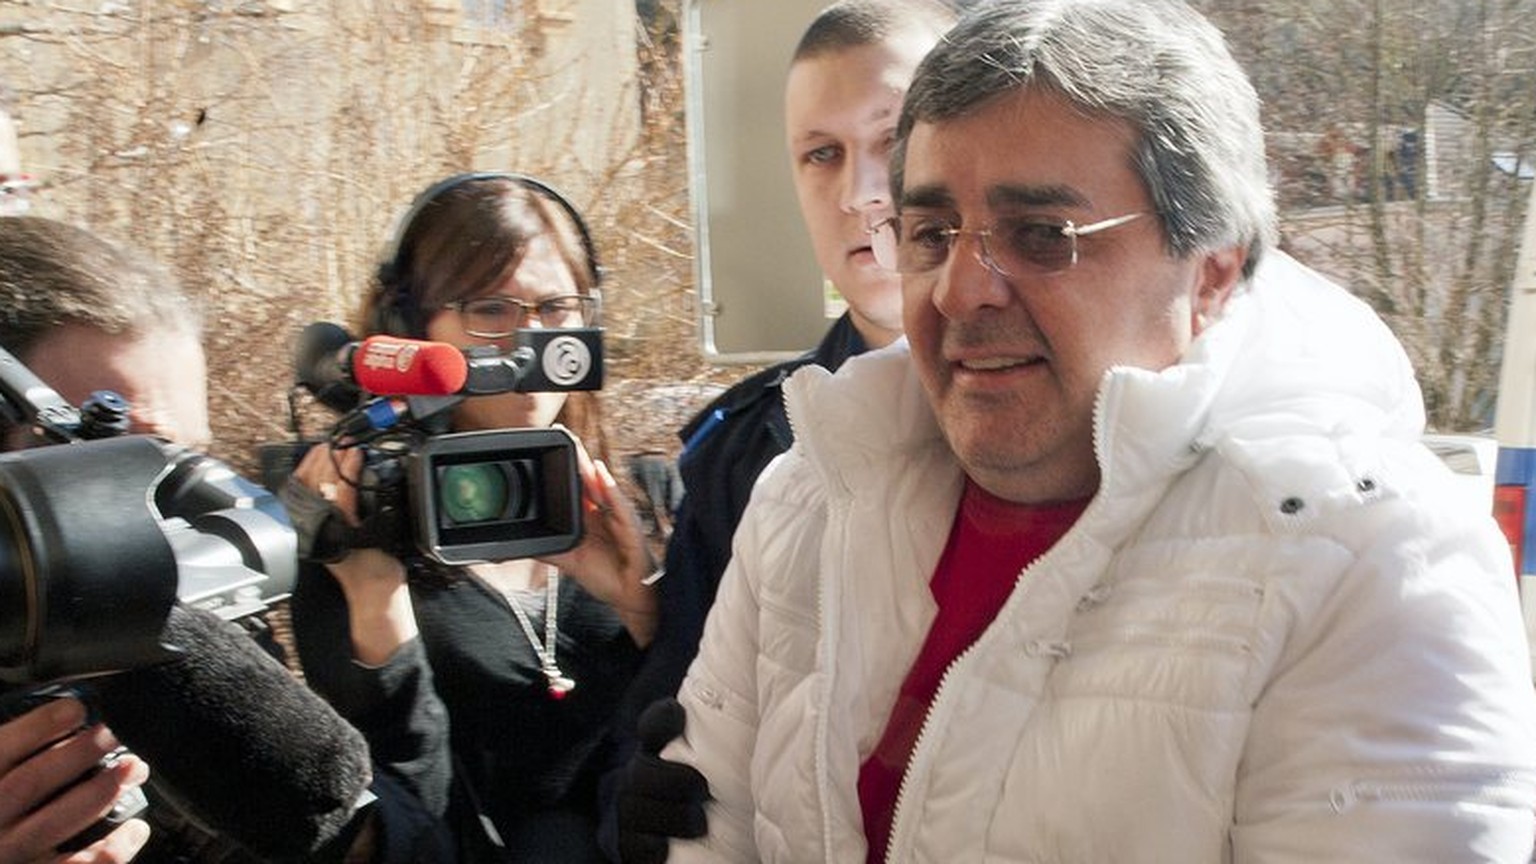 Bulat Chagaev, ancien president de Neuchatel Xamax, lors de son arrivee, menotte, au tribunal de Boudry NE, ce mercredi 29 fevrier 2012. (KEYSTONE/Sandro Campardo)